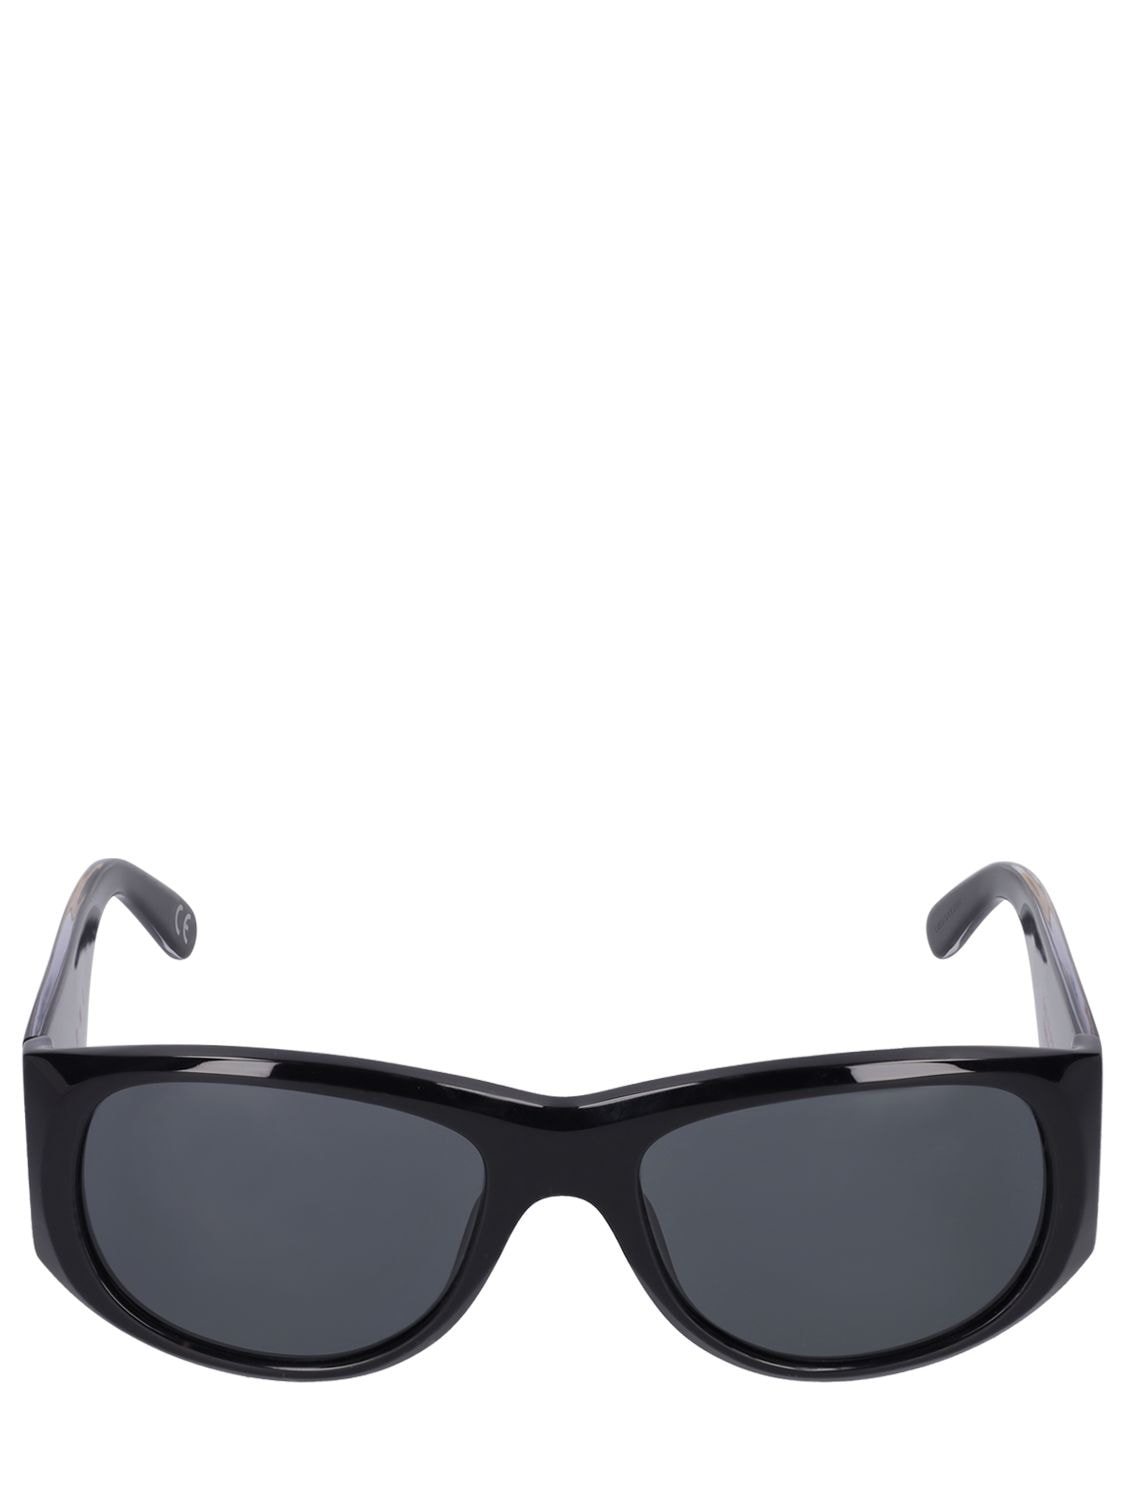 Image of Orinoco River Black Acetate Sunglasses